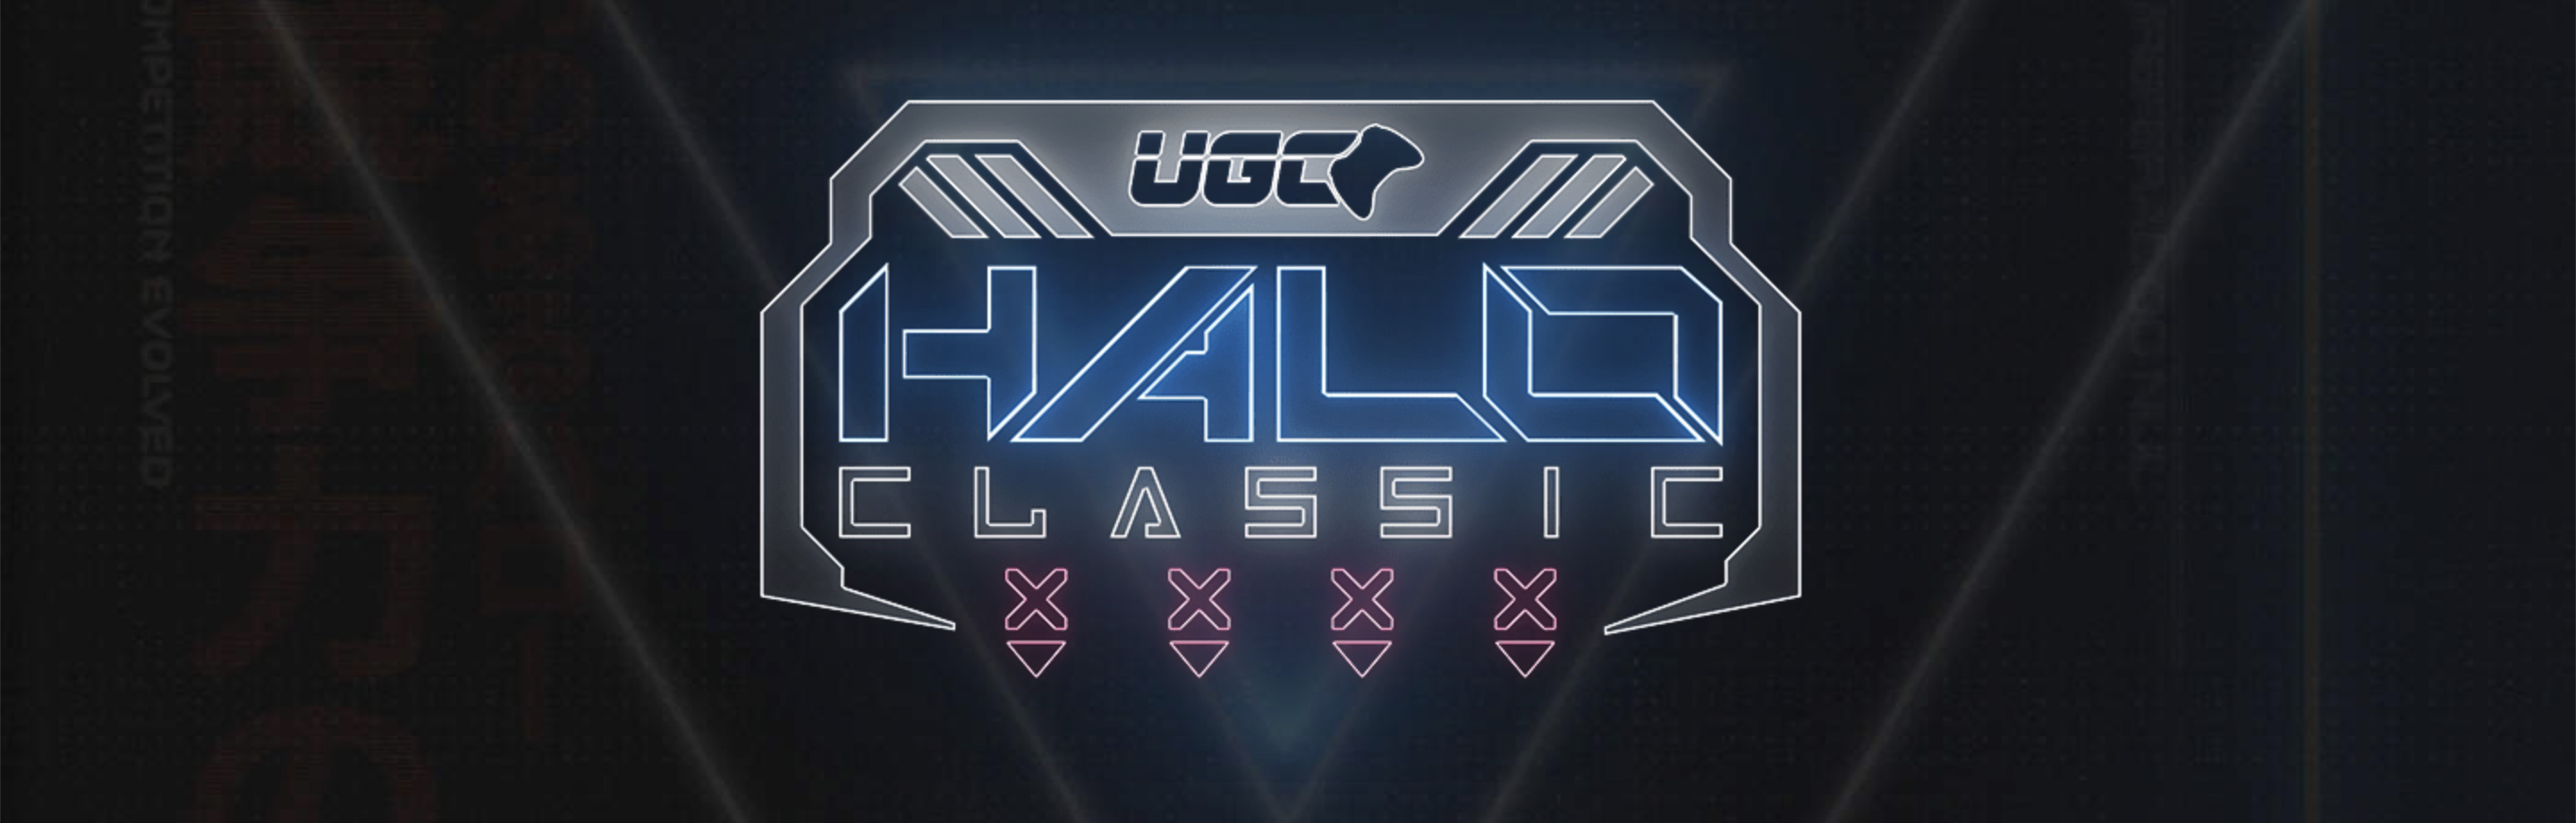 Upcoming Halo Classic tournament takes us back to Halo 3 Esports glory days 